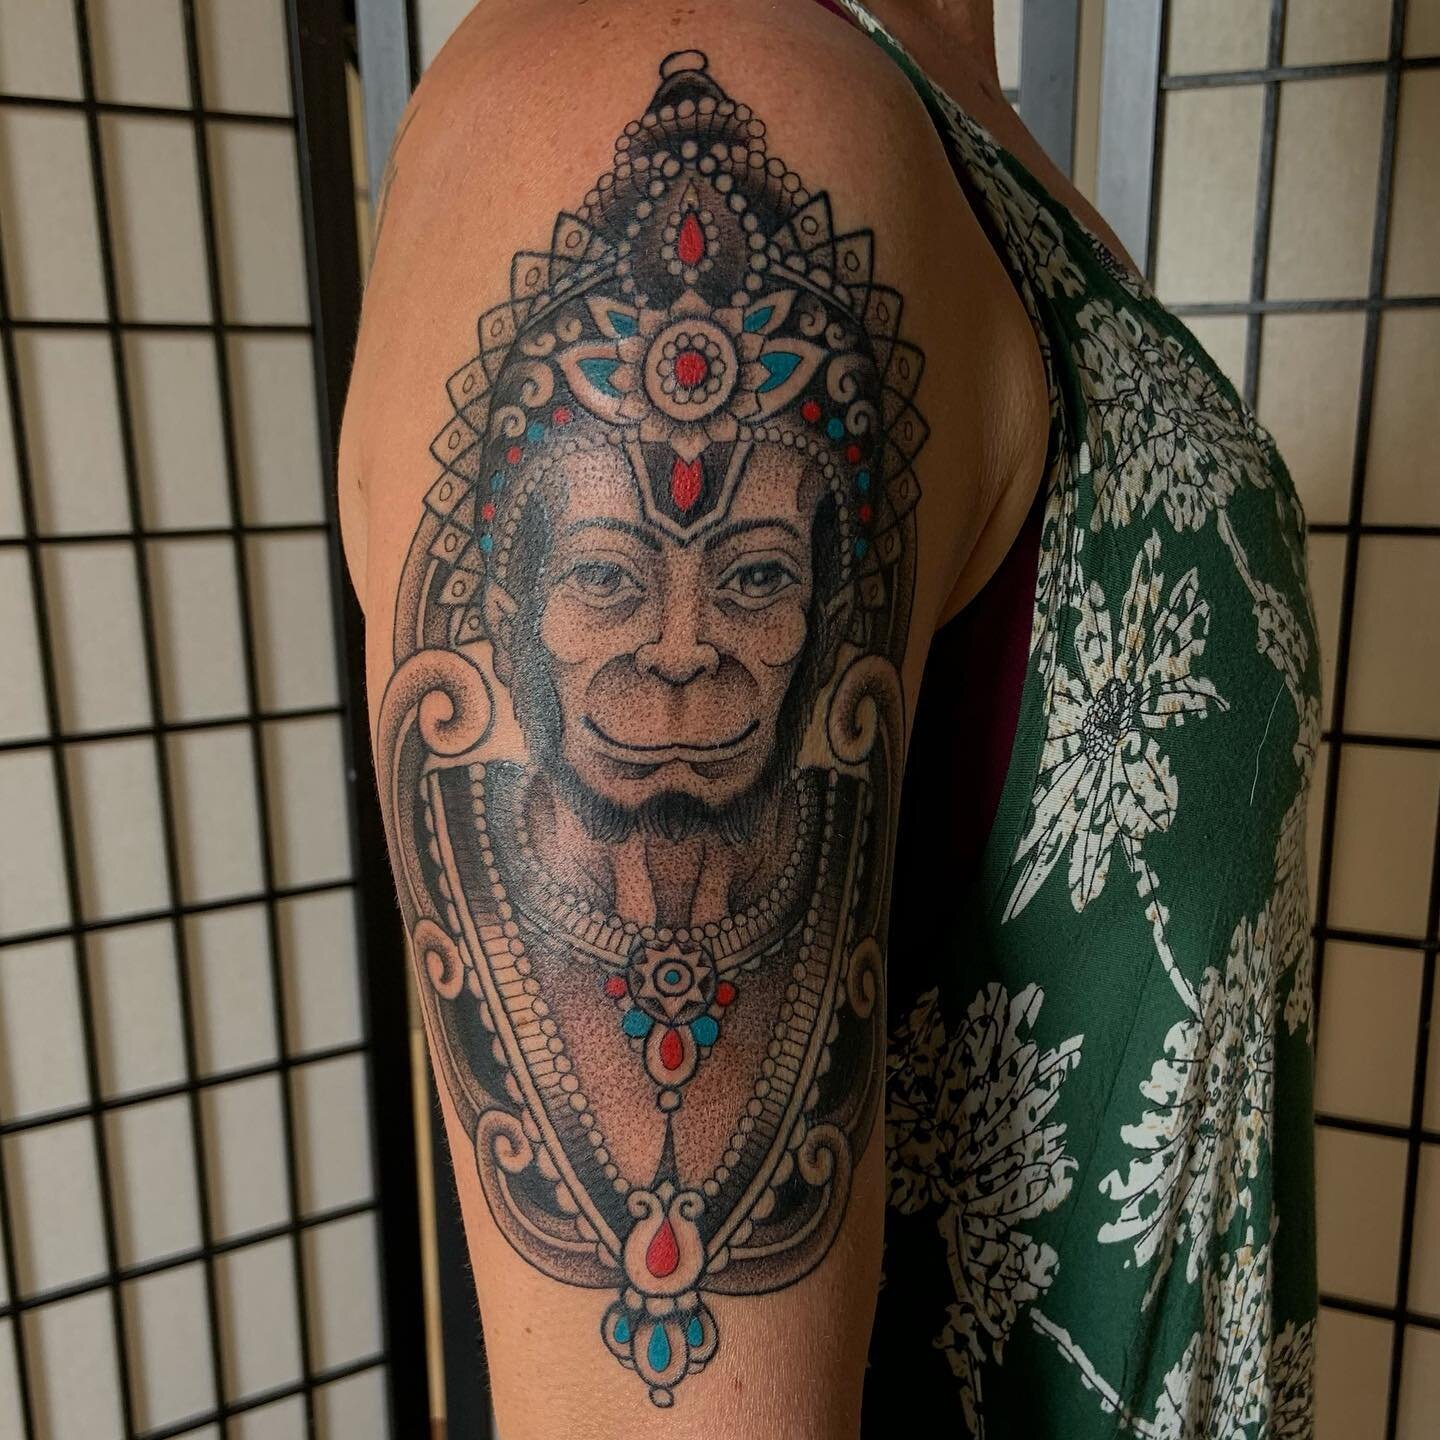 Hanuman for @lee.marie_yogini 
Appreciative of the opportunity to create with you 🙏🏻
Done @good_karma_tattoo 

.
.
.
.
.
.
.
.
.
.
.
#tttism #dotworktattoos #occultarcana #tattrx #omfgeometry #geometrip #geometrictattoohunter #sacredgeometrytattoo 